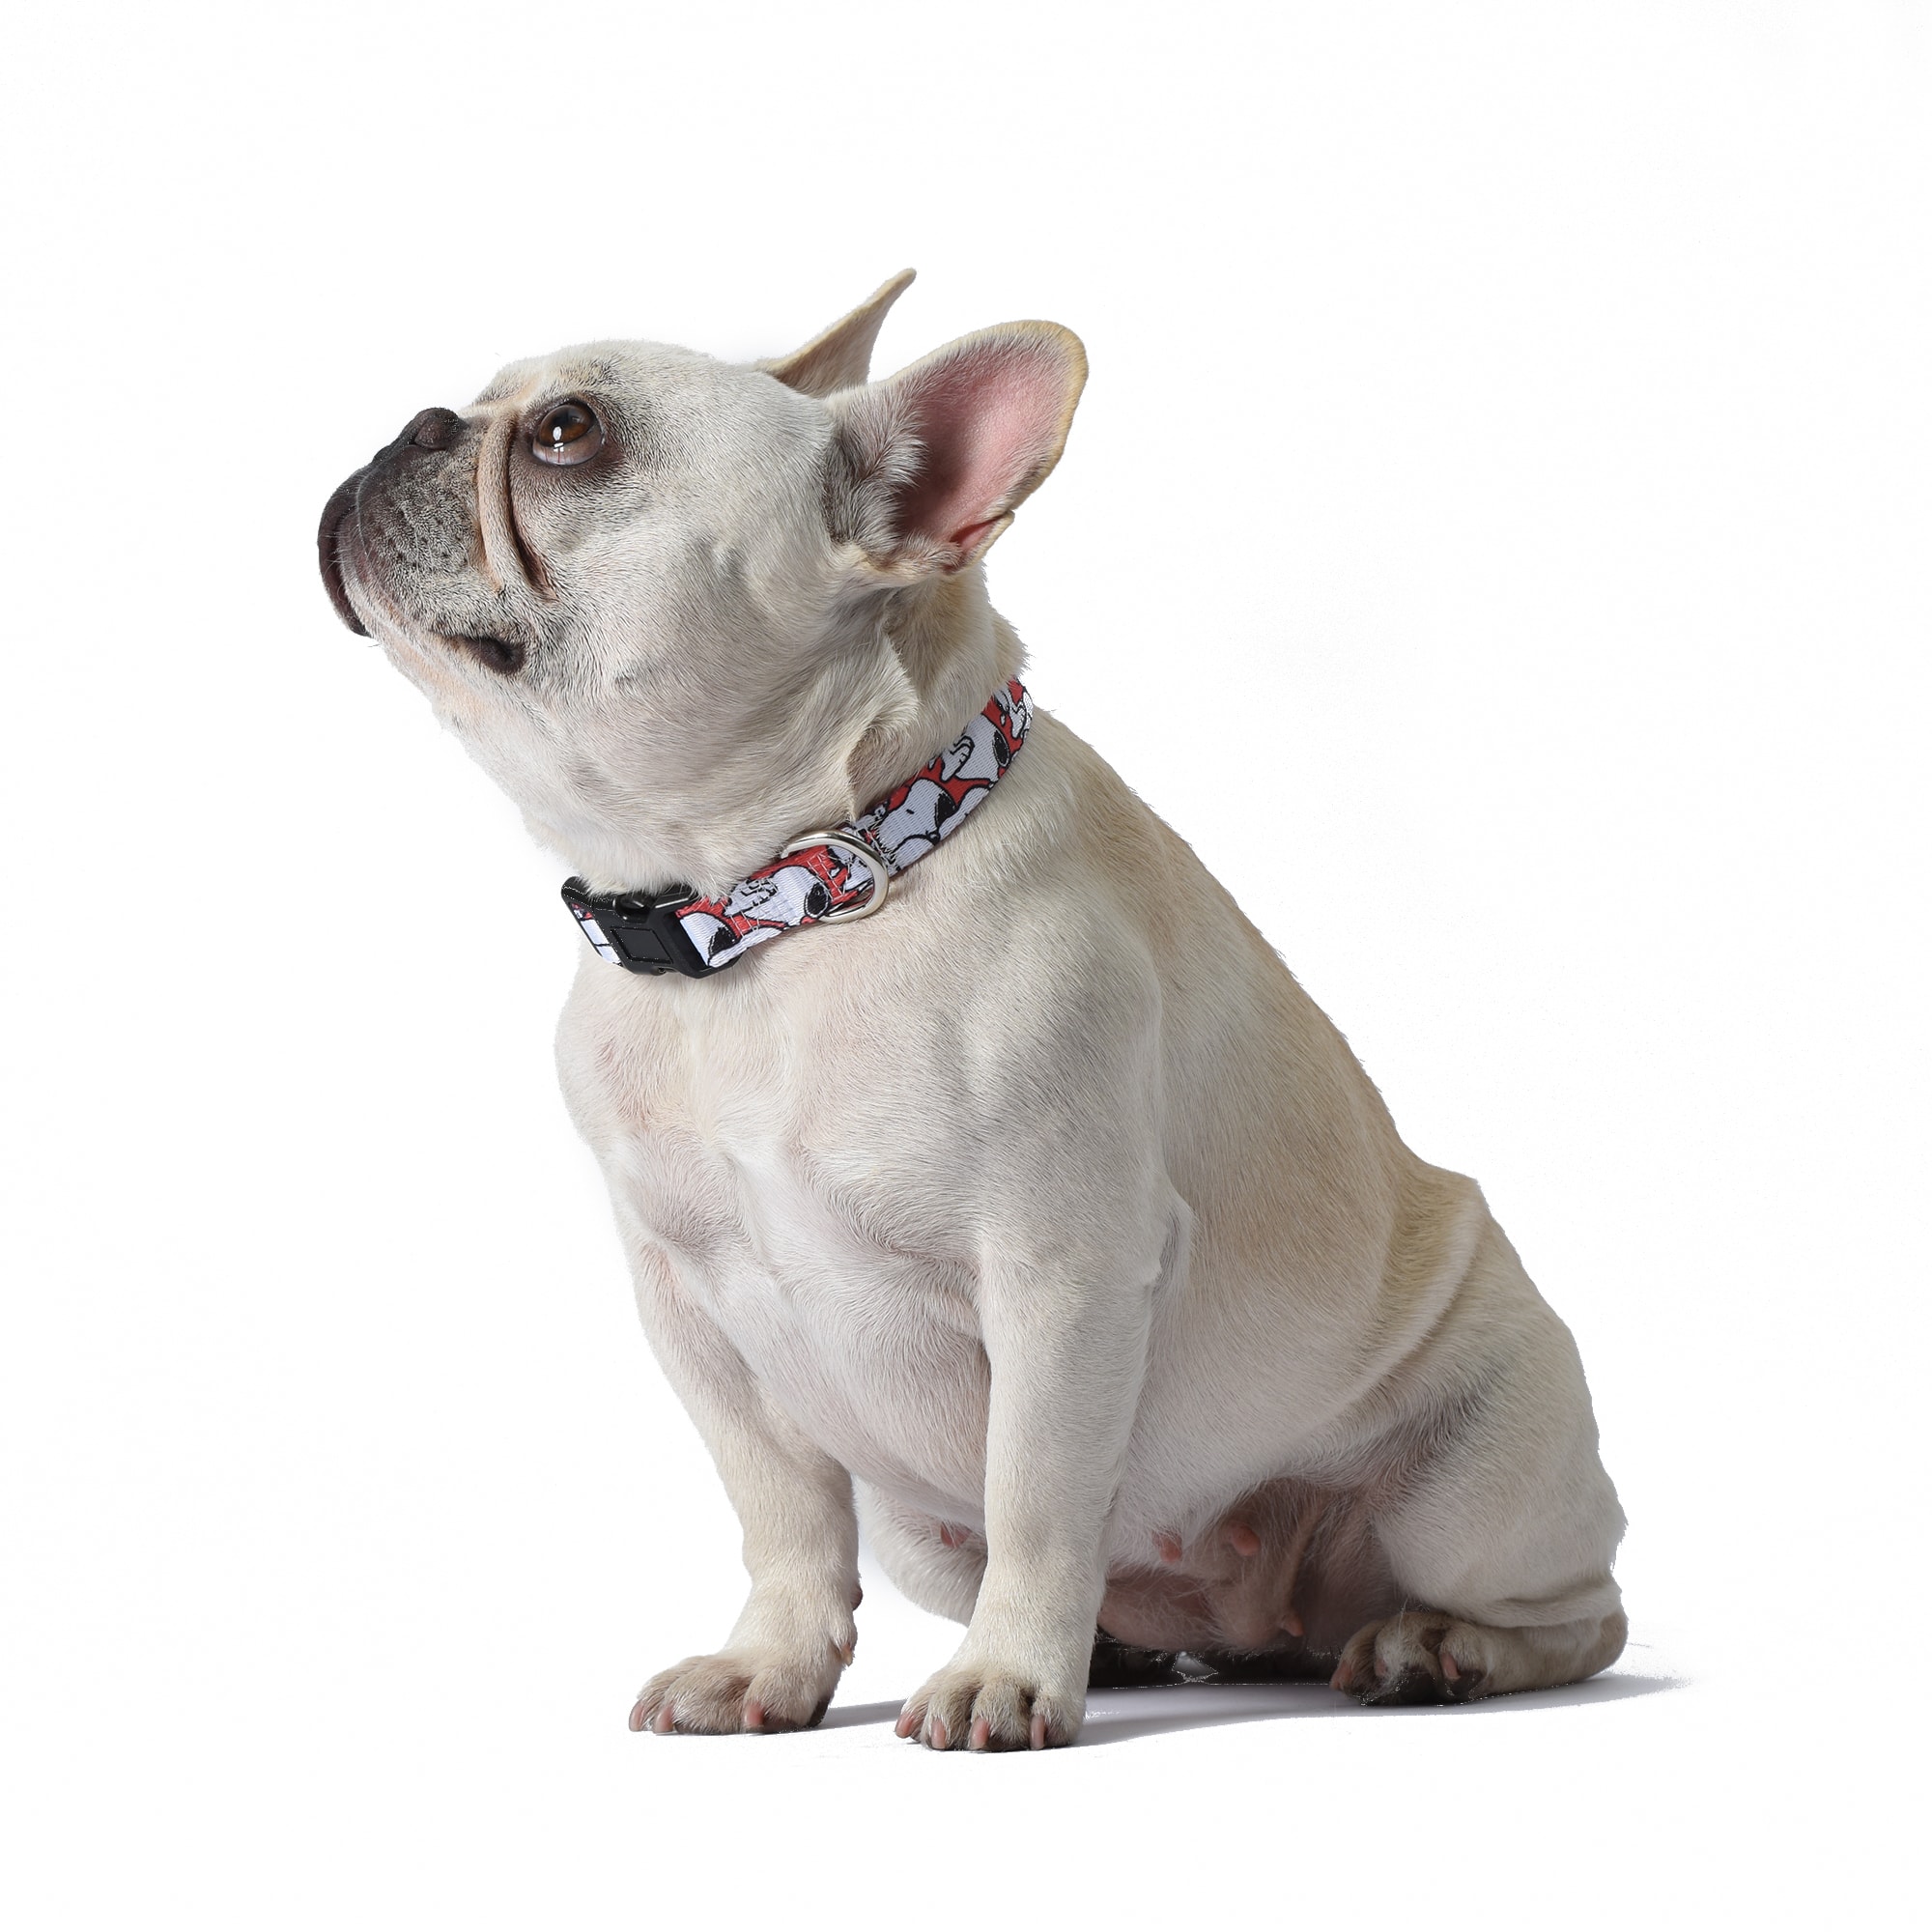 Fetch Pet Collar and Leash Set 